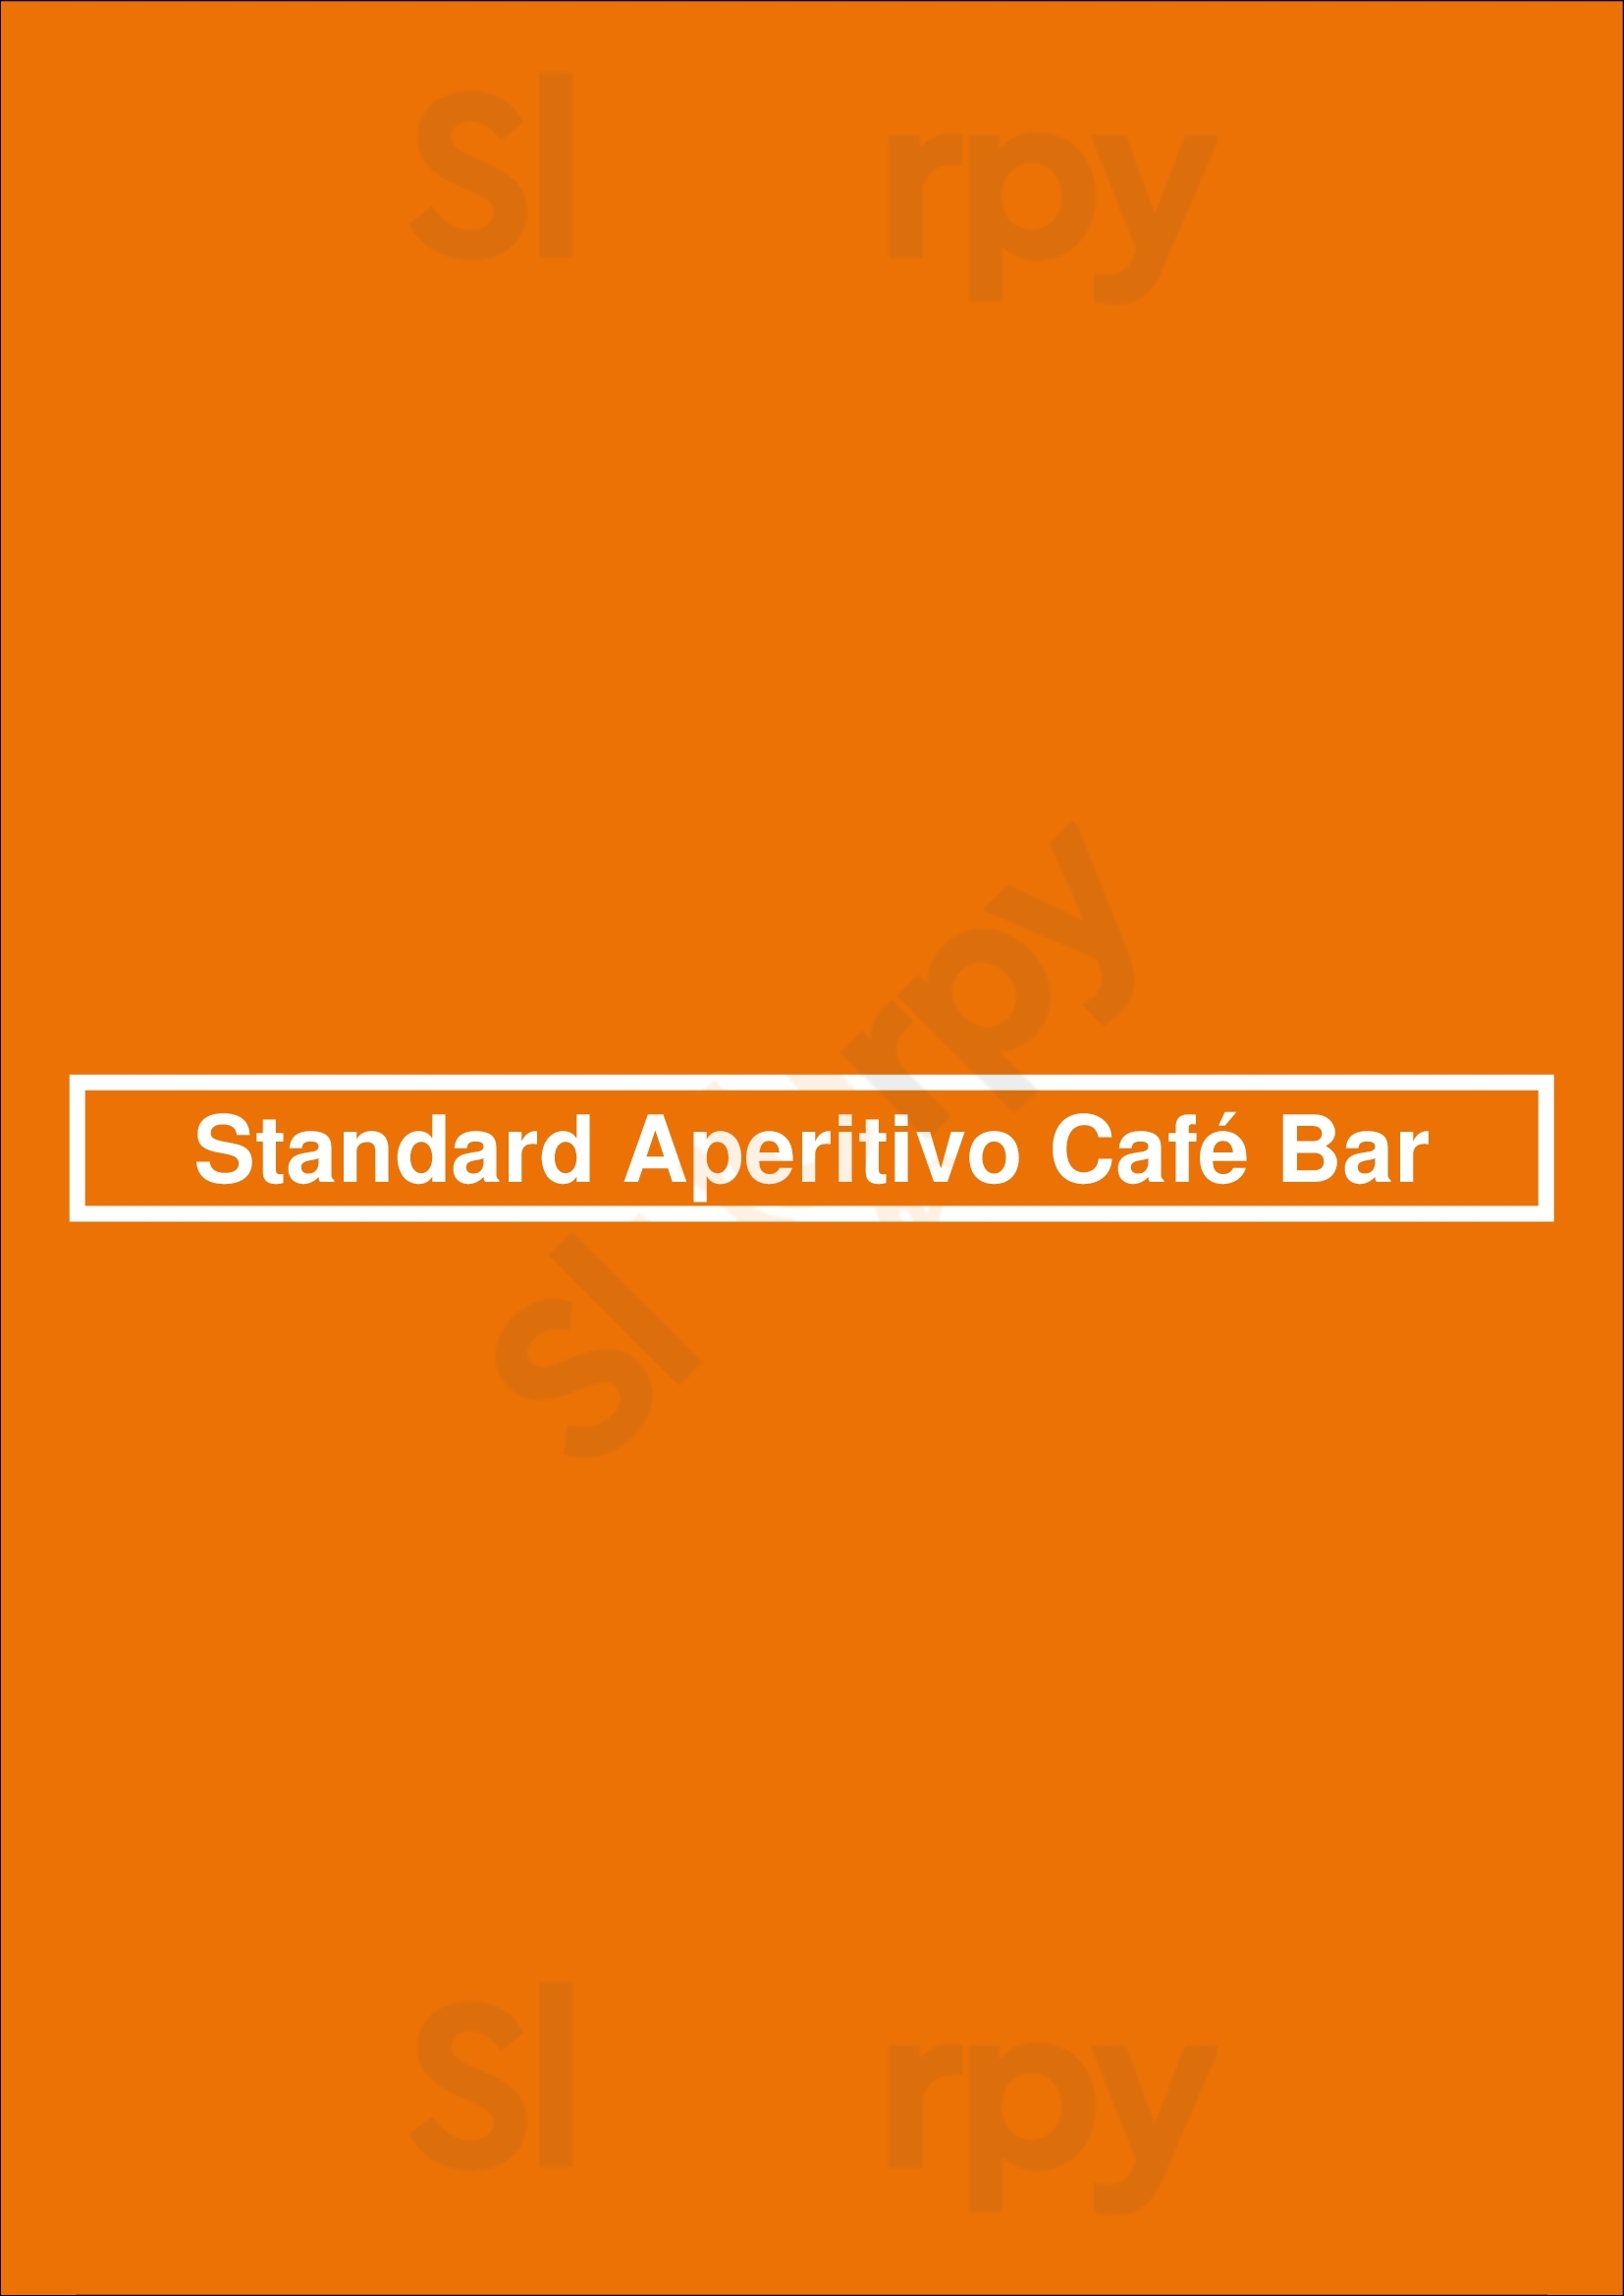 Standard Aperitivo Café Bar Hamburg Menu - 1